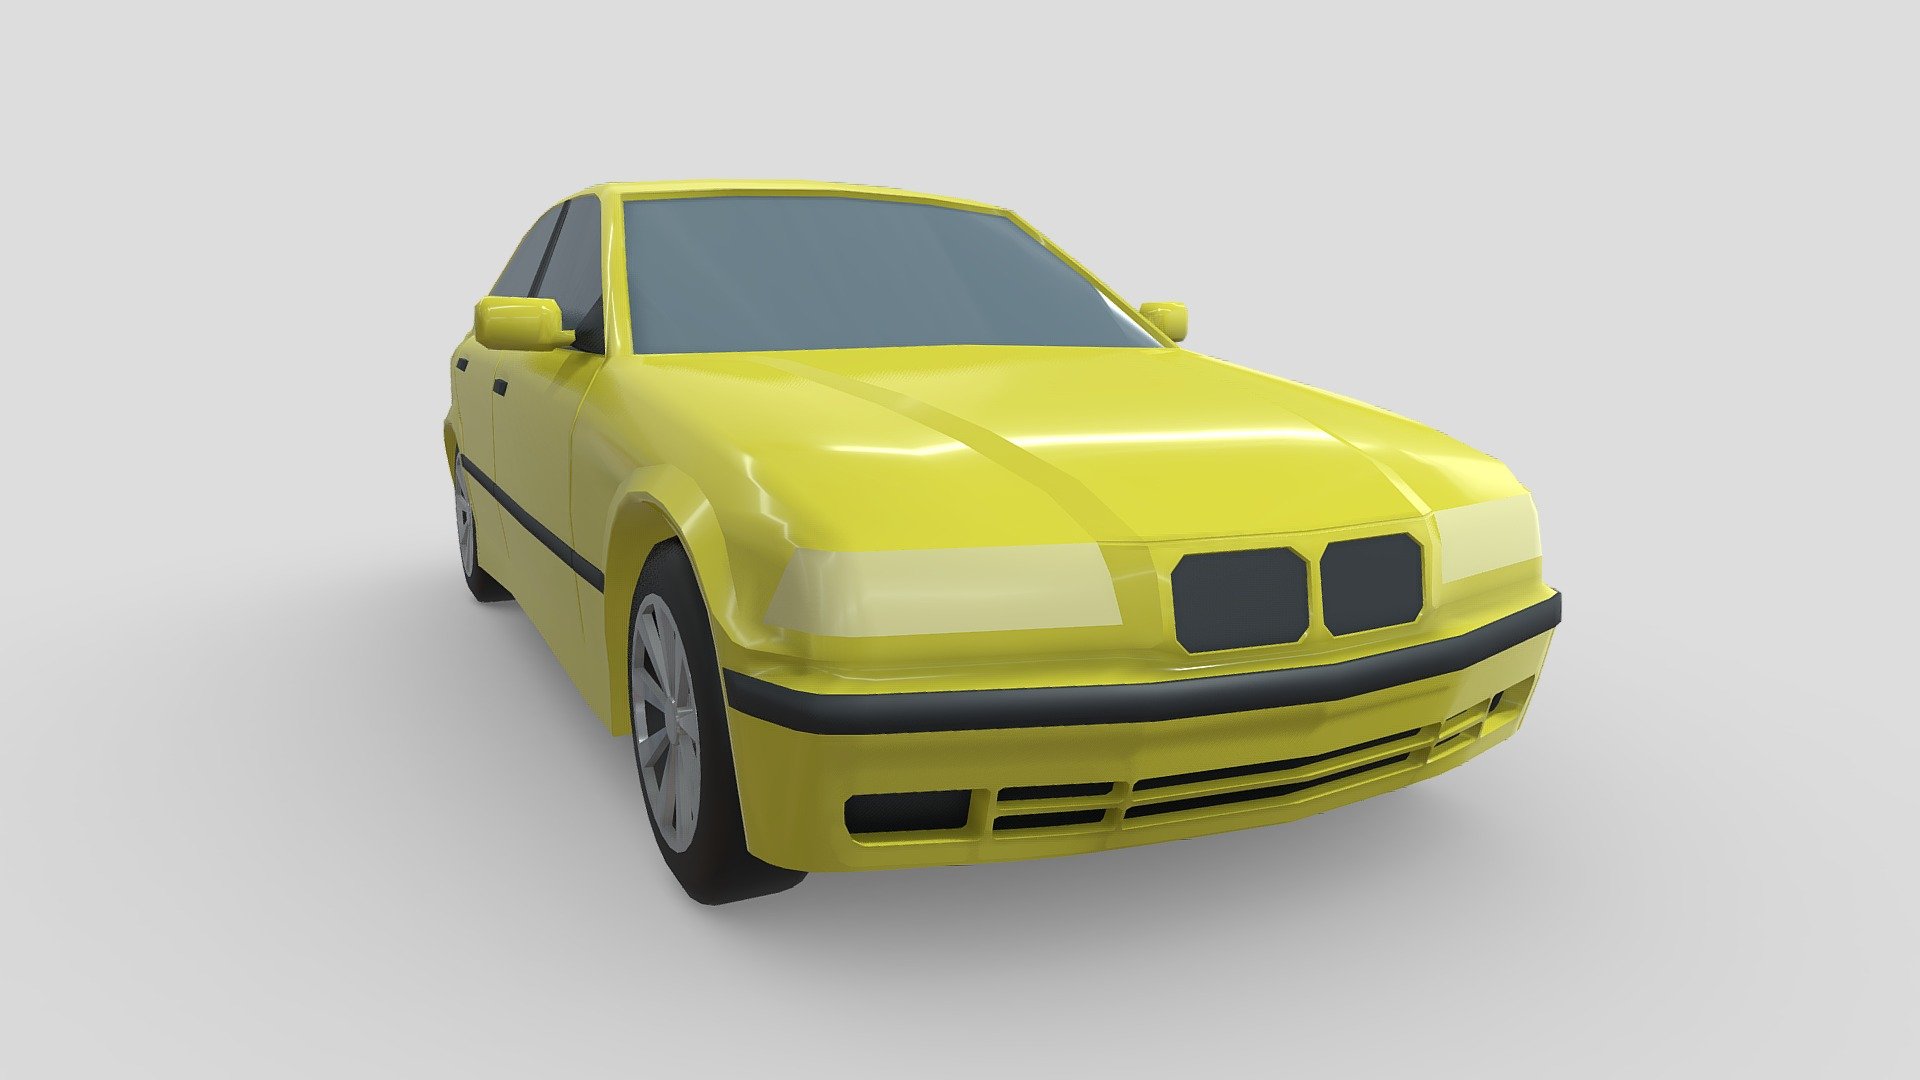 BMW E36 low poly, game ready model 3d model